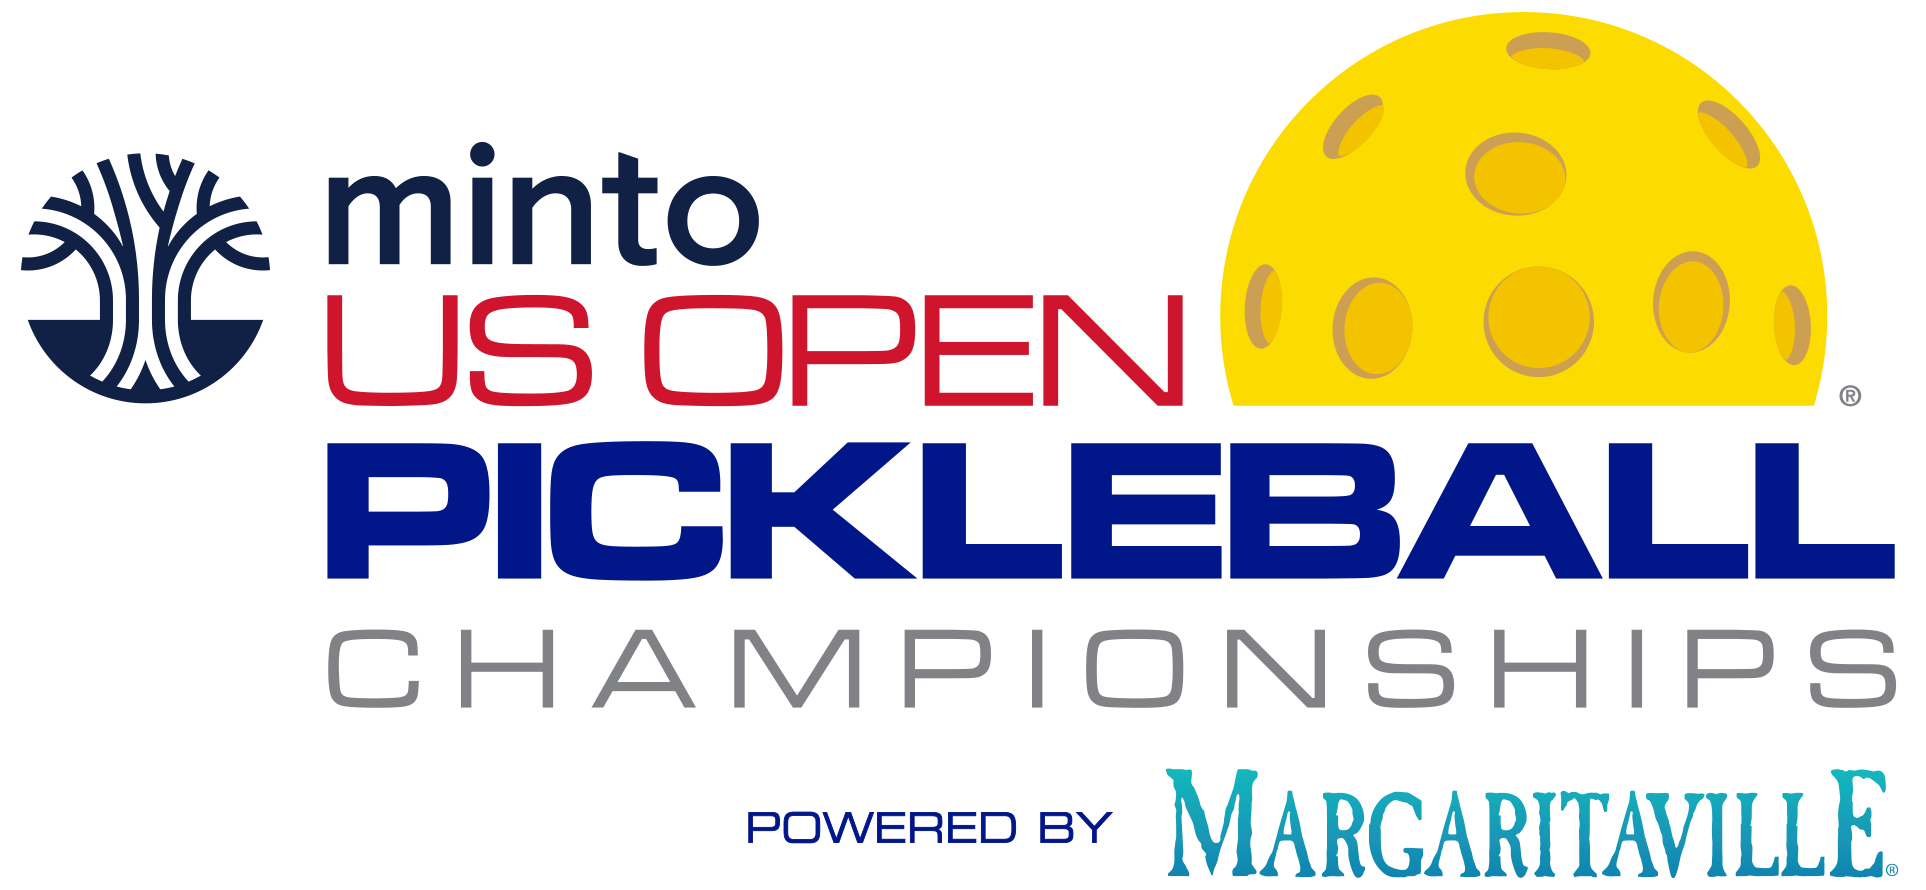 US Open Pickleball Chanpionship